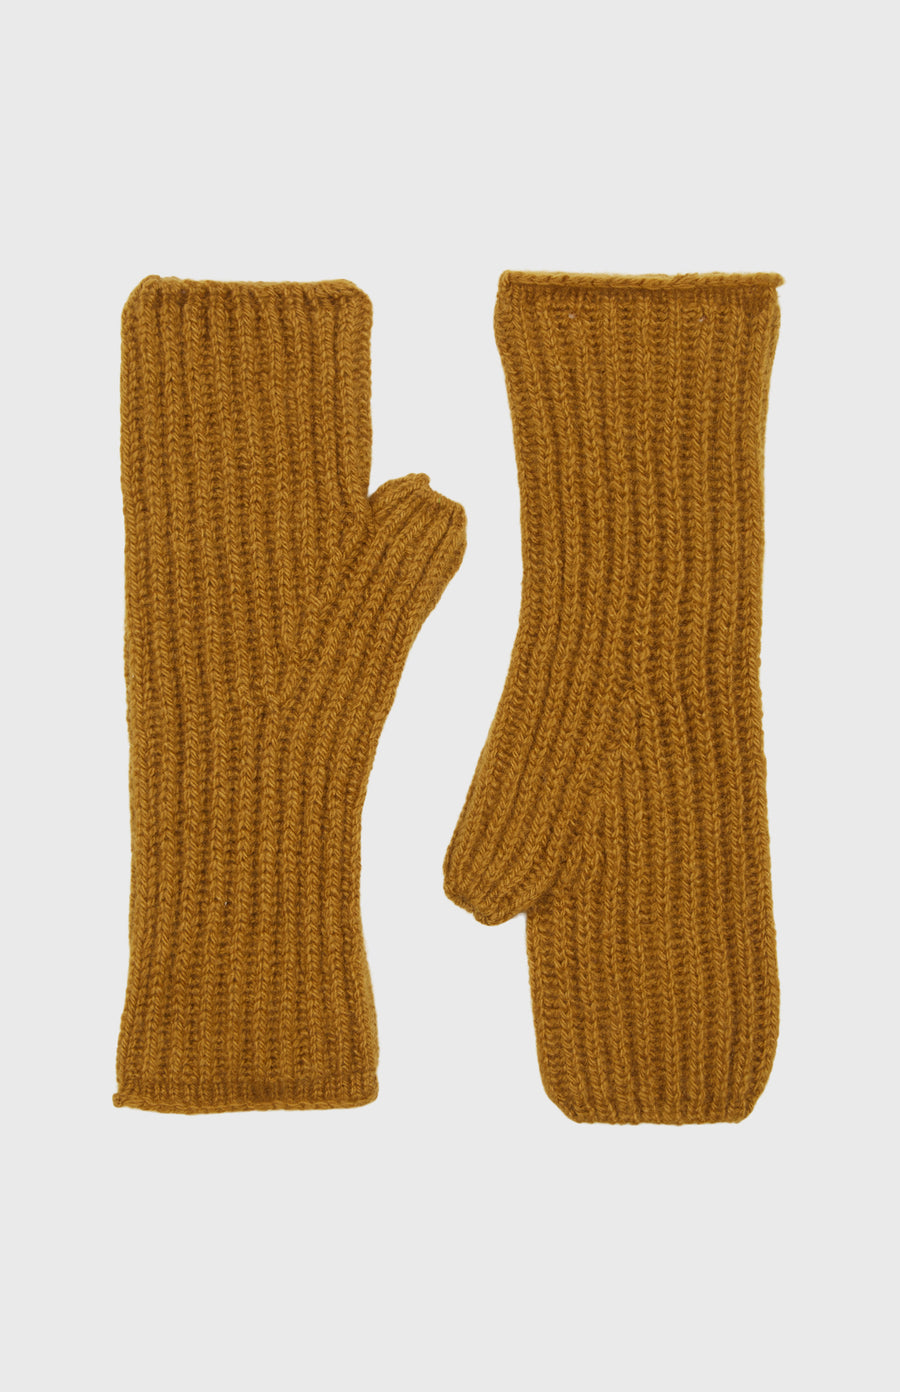 Fisherman's rib Knit Cashmere Wrist Warmers in Mustard - Pringle of Scotland